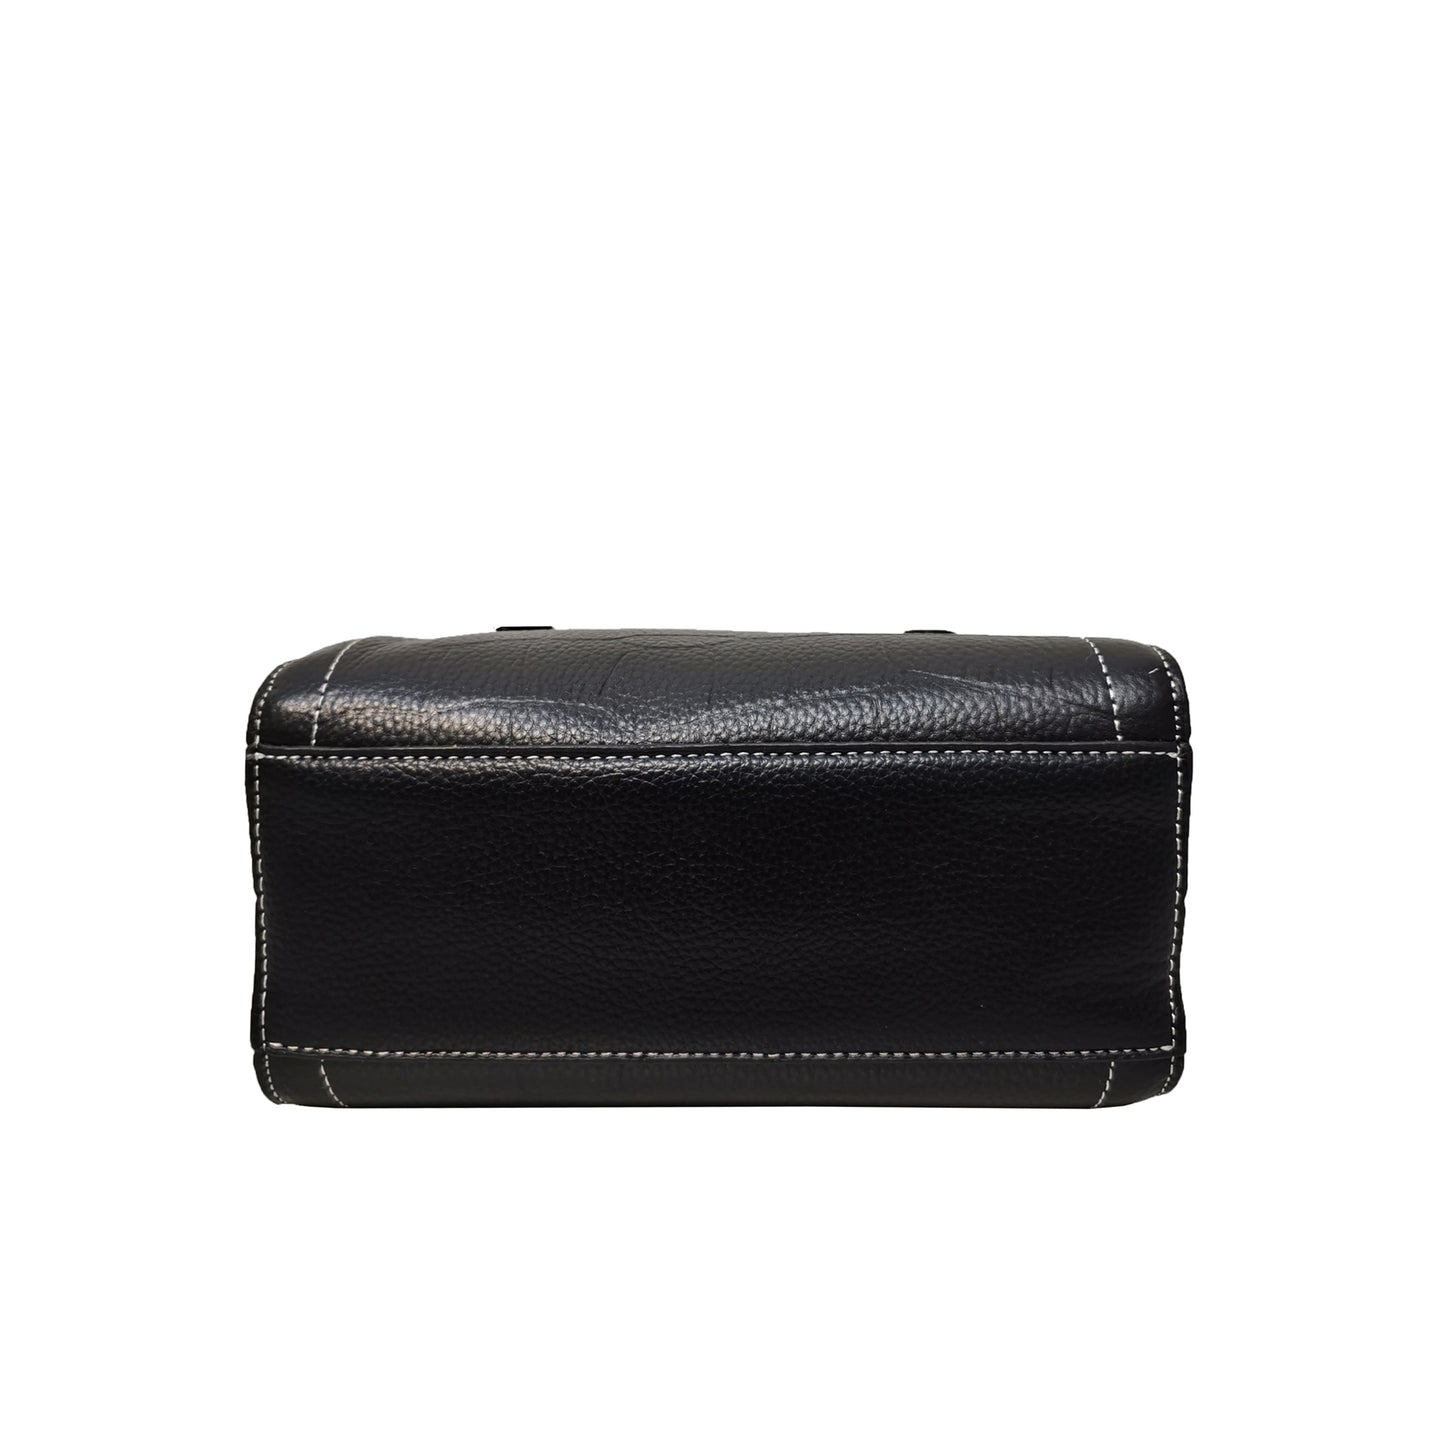 Women's genuine cowhide leather handbag Belle mini design in croc print